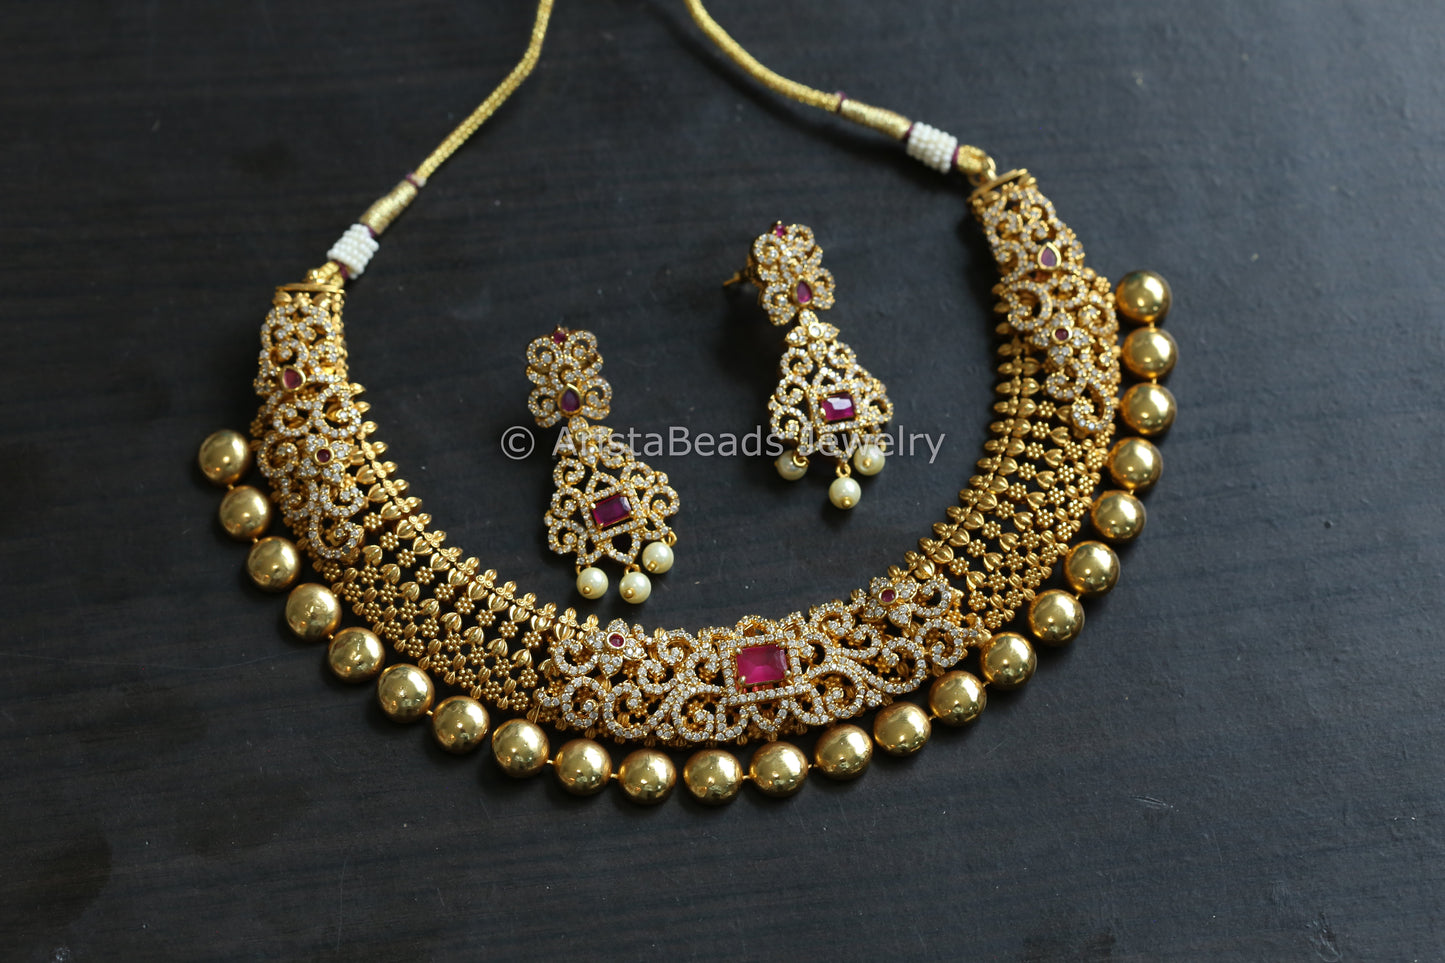 Antique Gold Naksi CZ Stone Necklace Set - Ruby